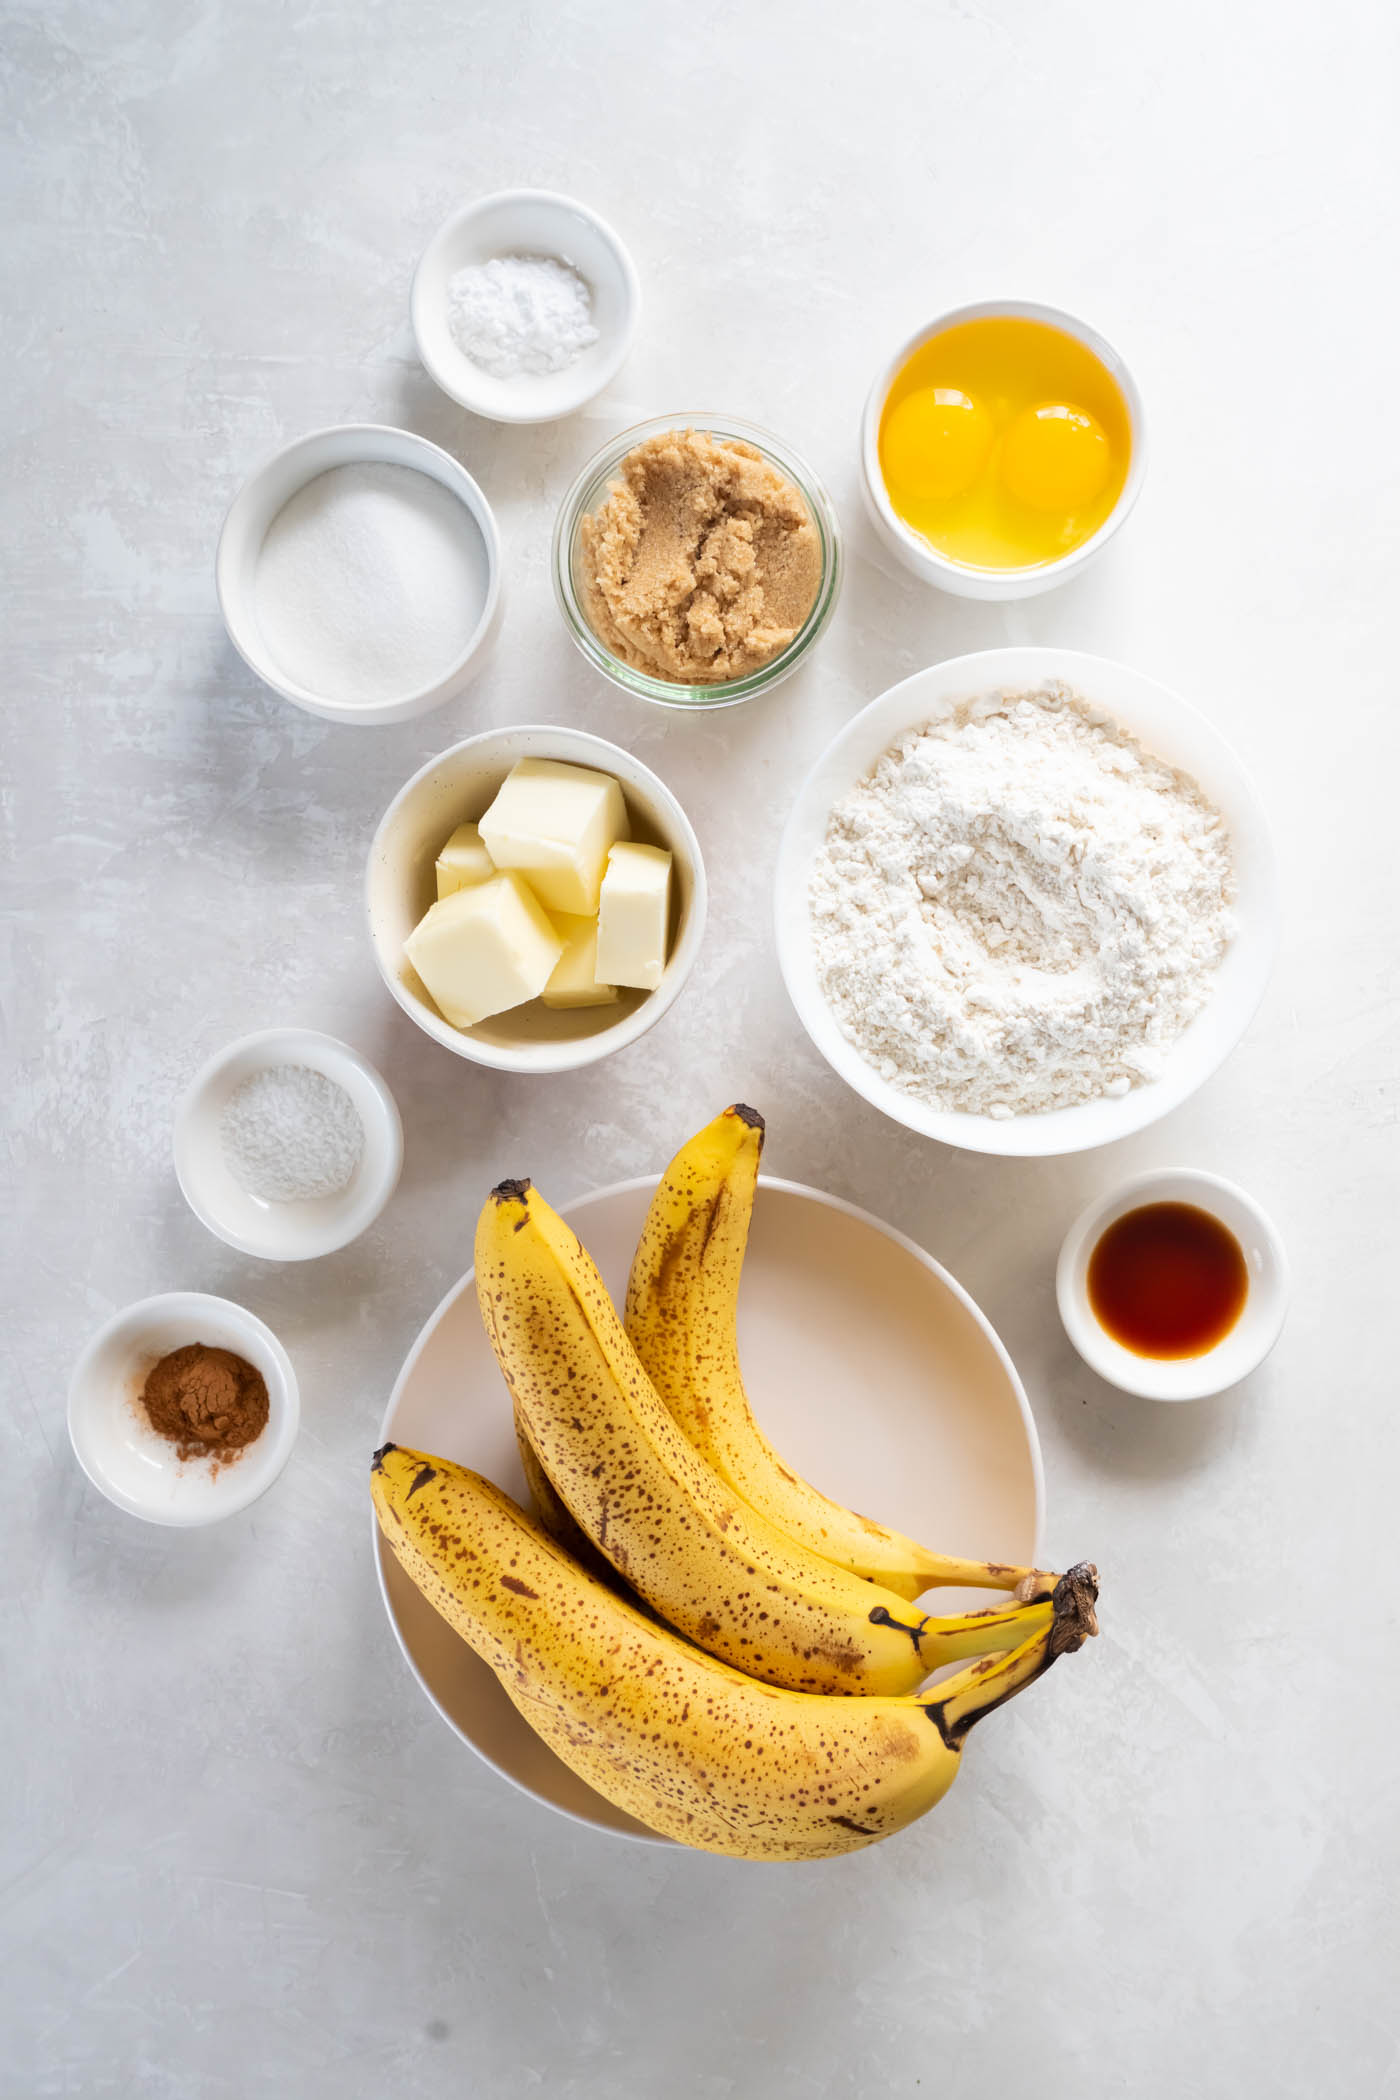 Ingredients for banana bread recipe.